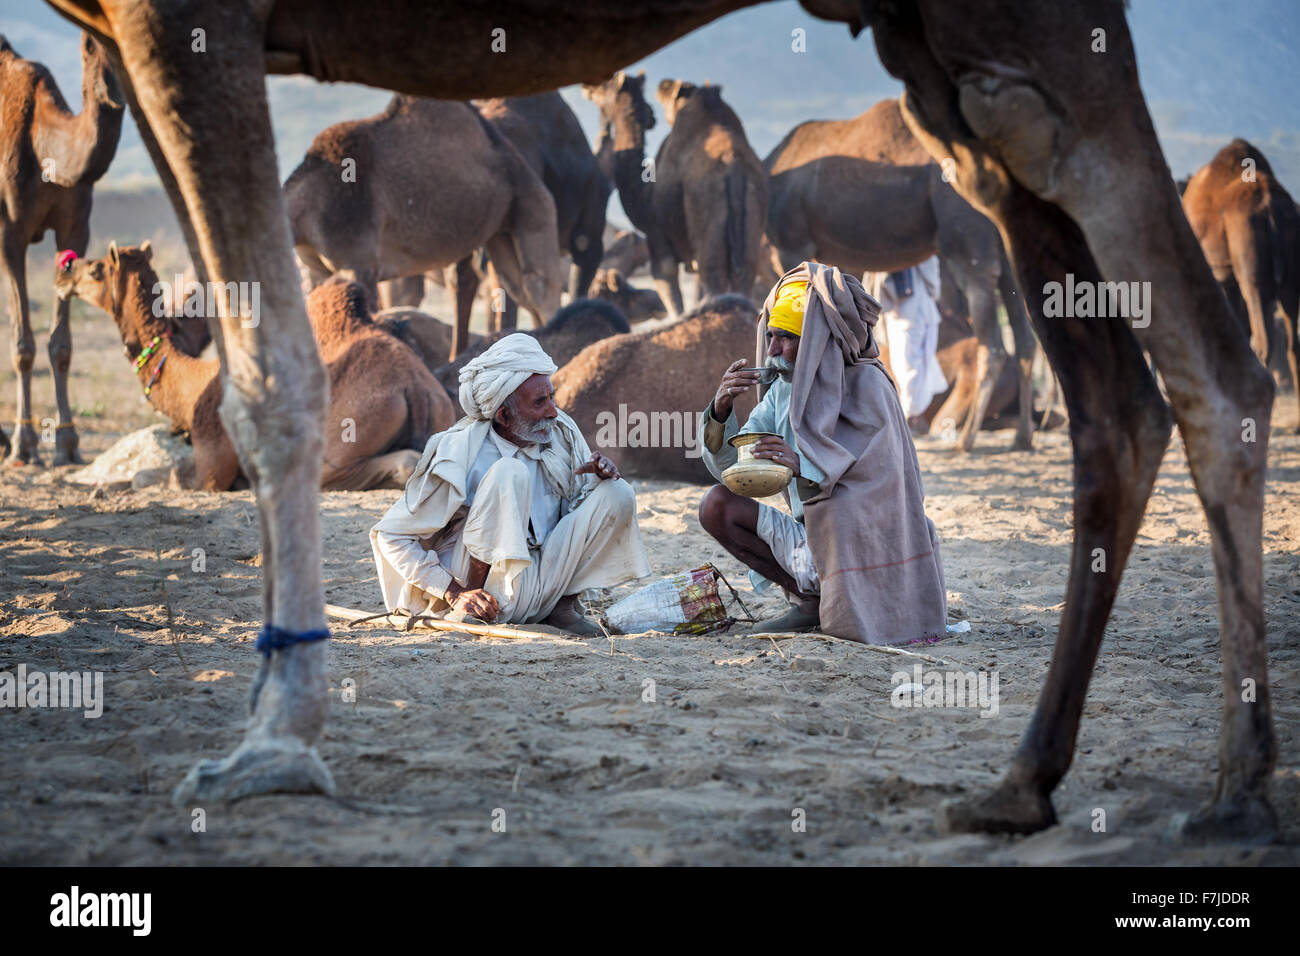 Zwei Männer mit einem Drink unter Kamele in Pushkar Mela Camel fair, Pushkar, Rajasthan, Indien Stockfoto